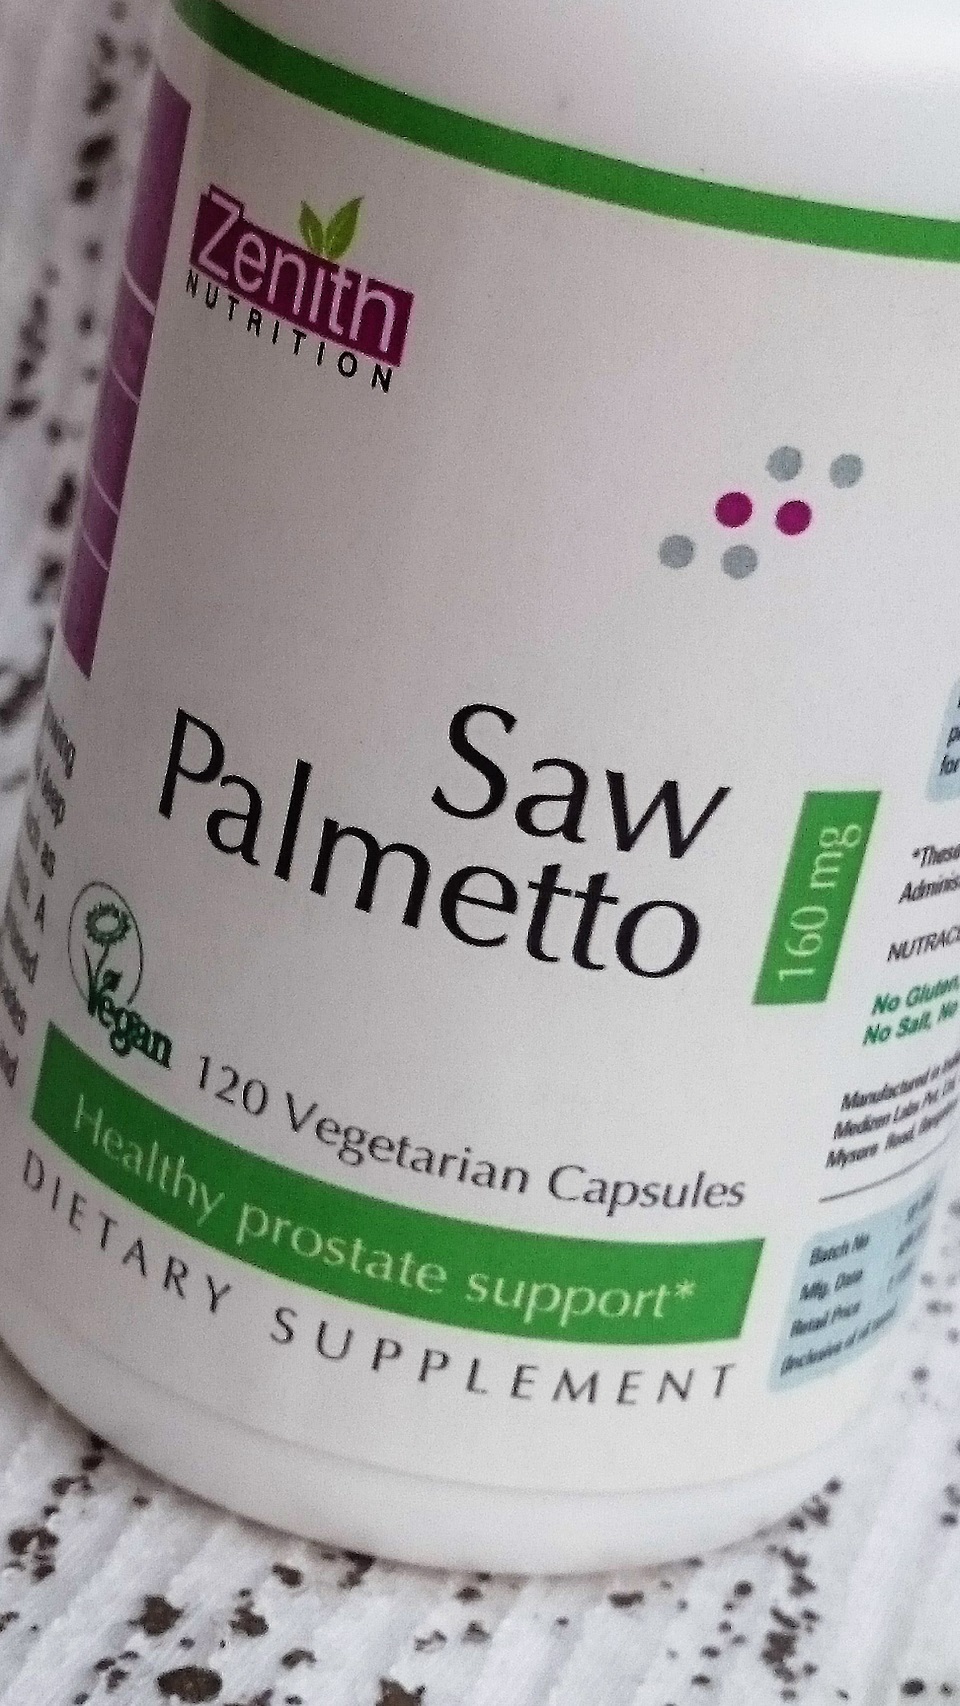 Zenith Nutrition Saw Palmetto Vegetarian Capsules